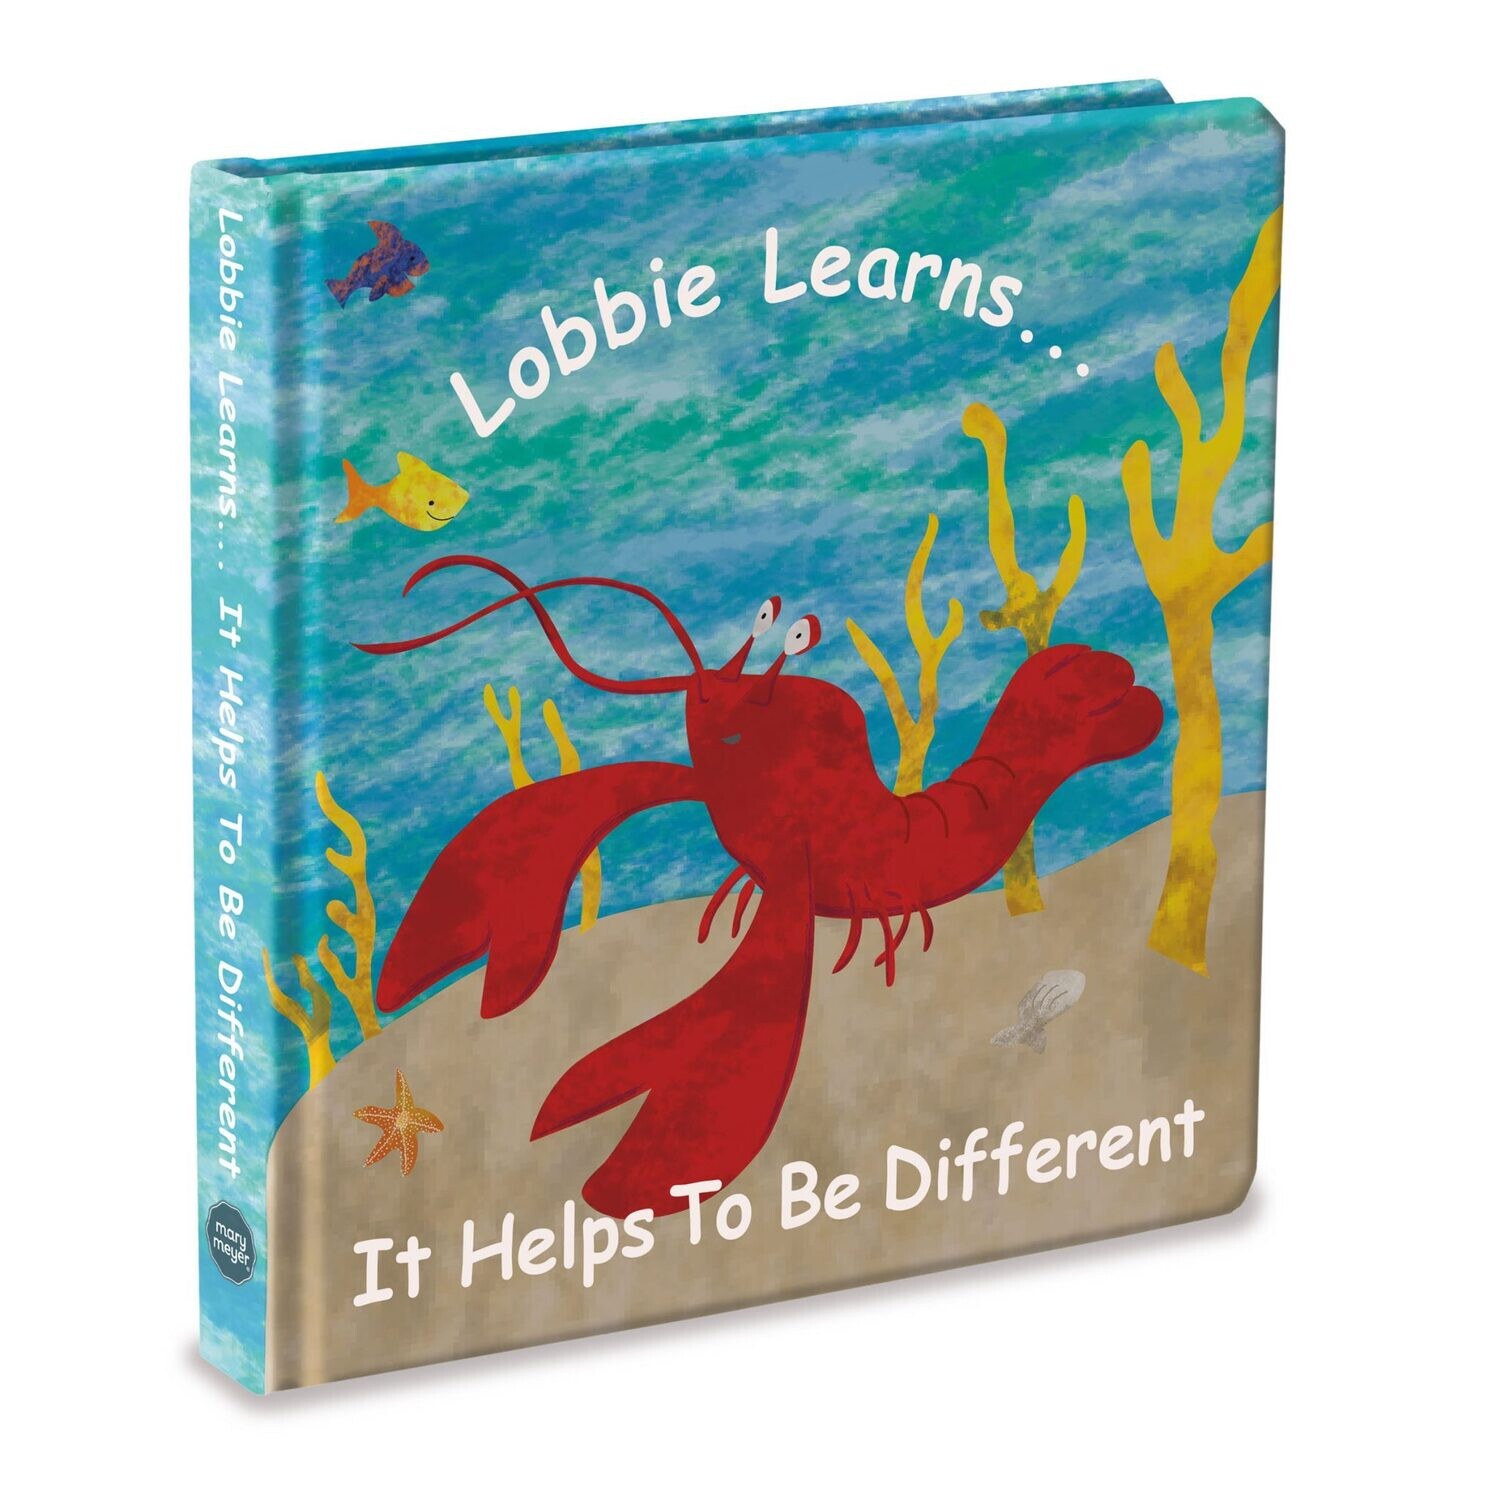 Mary Meyer Book "Lobbie Learns"